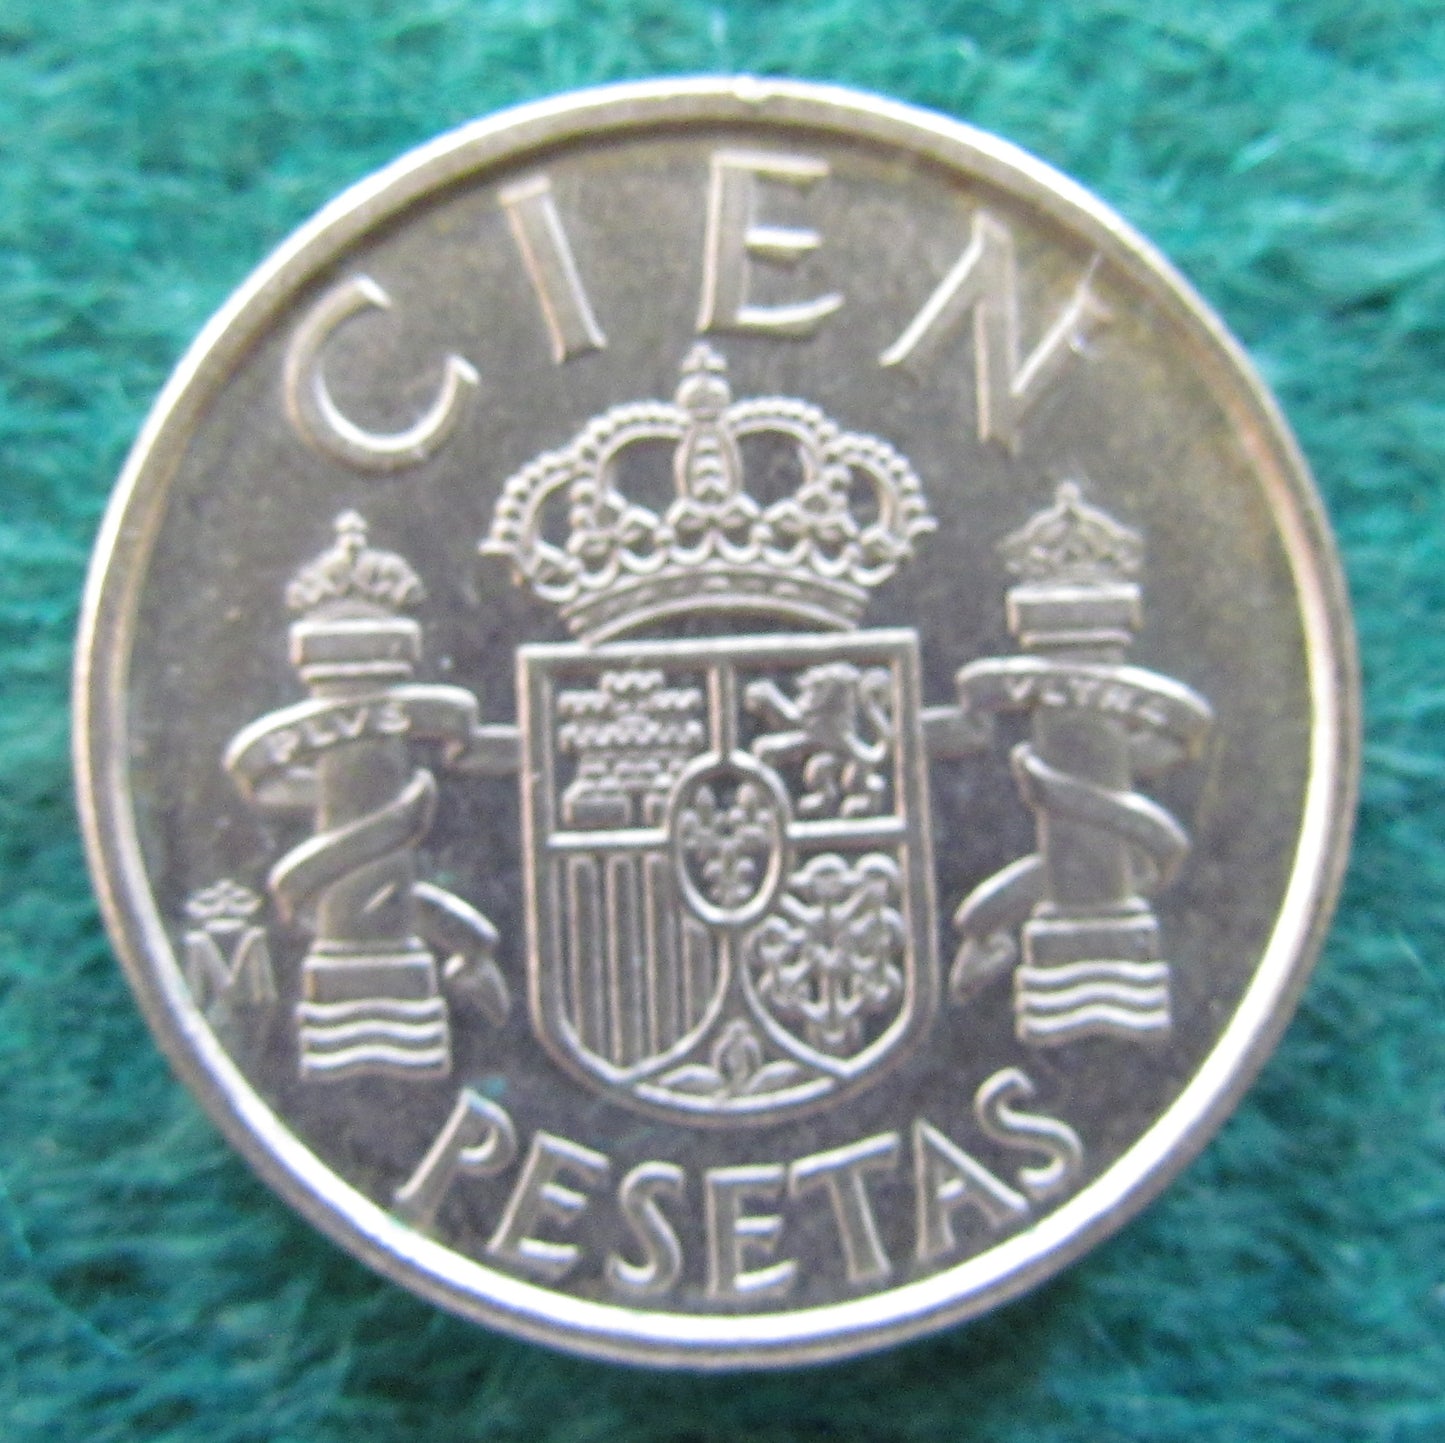 Spanish 1982 100 Pesetas Coin - Circulated